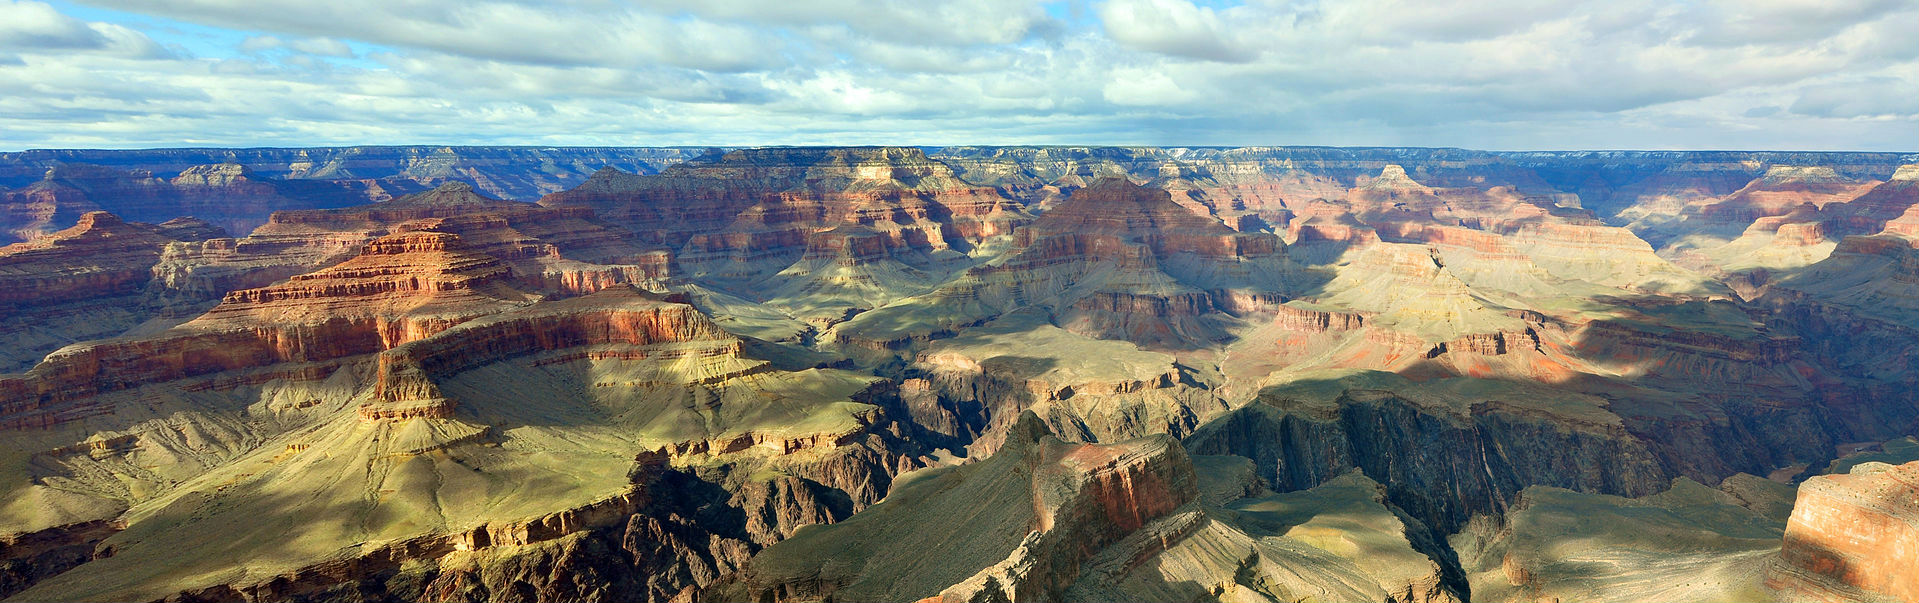 8 Highlights van de Grand Canyon